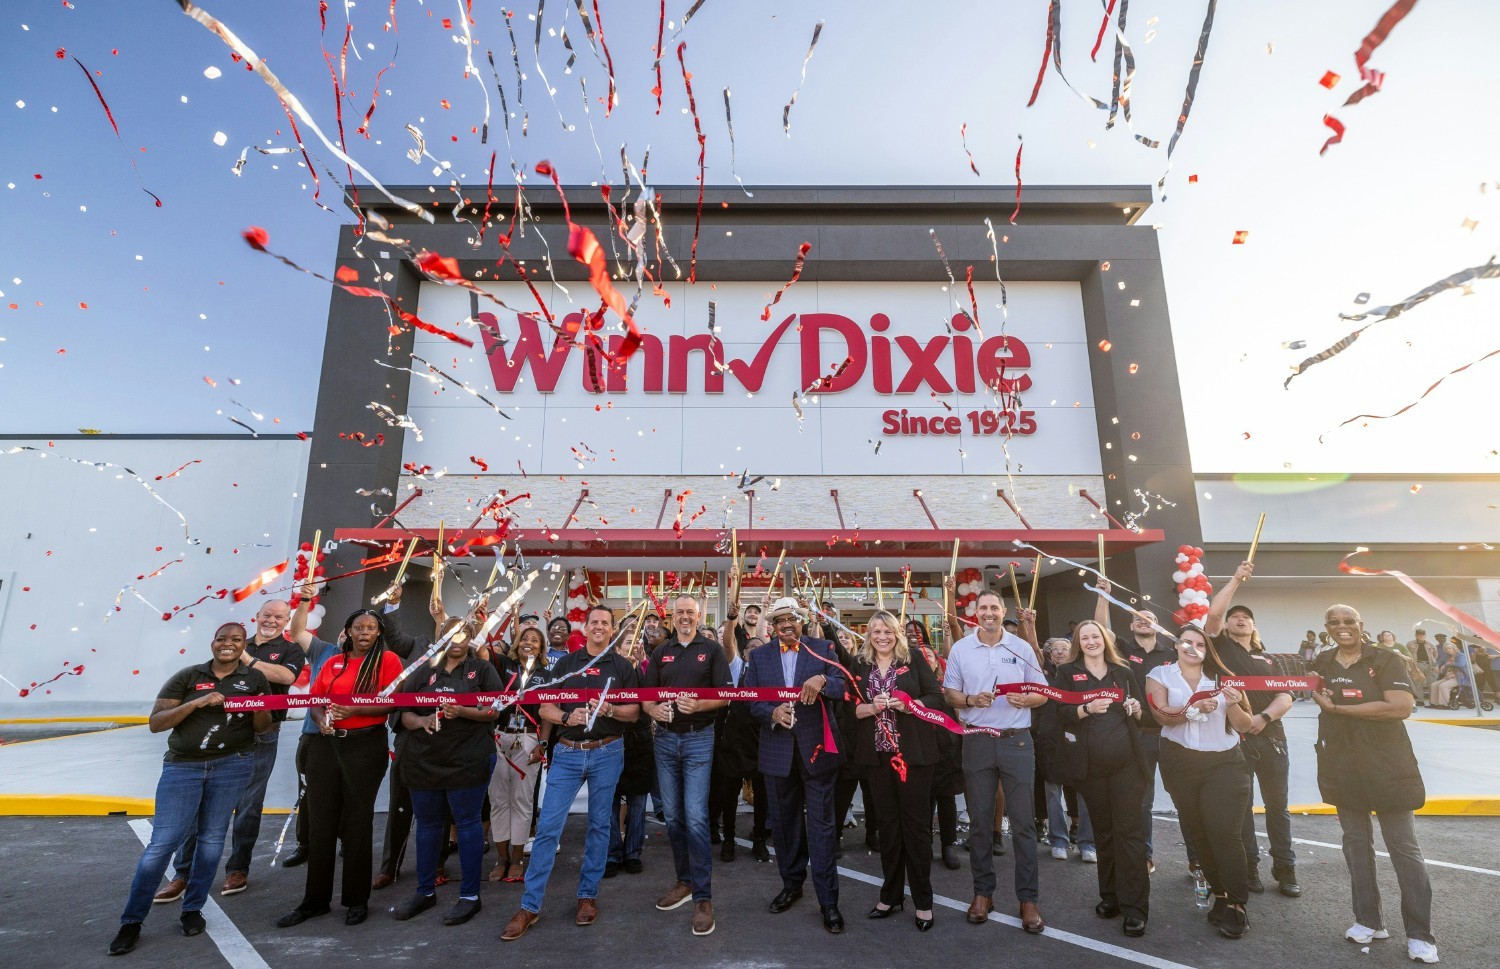 Winn-Dixie grand opening celebration in the College Park area of Jacksonville, FL. 